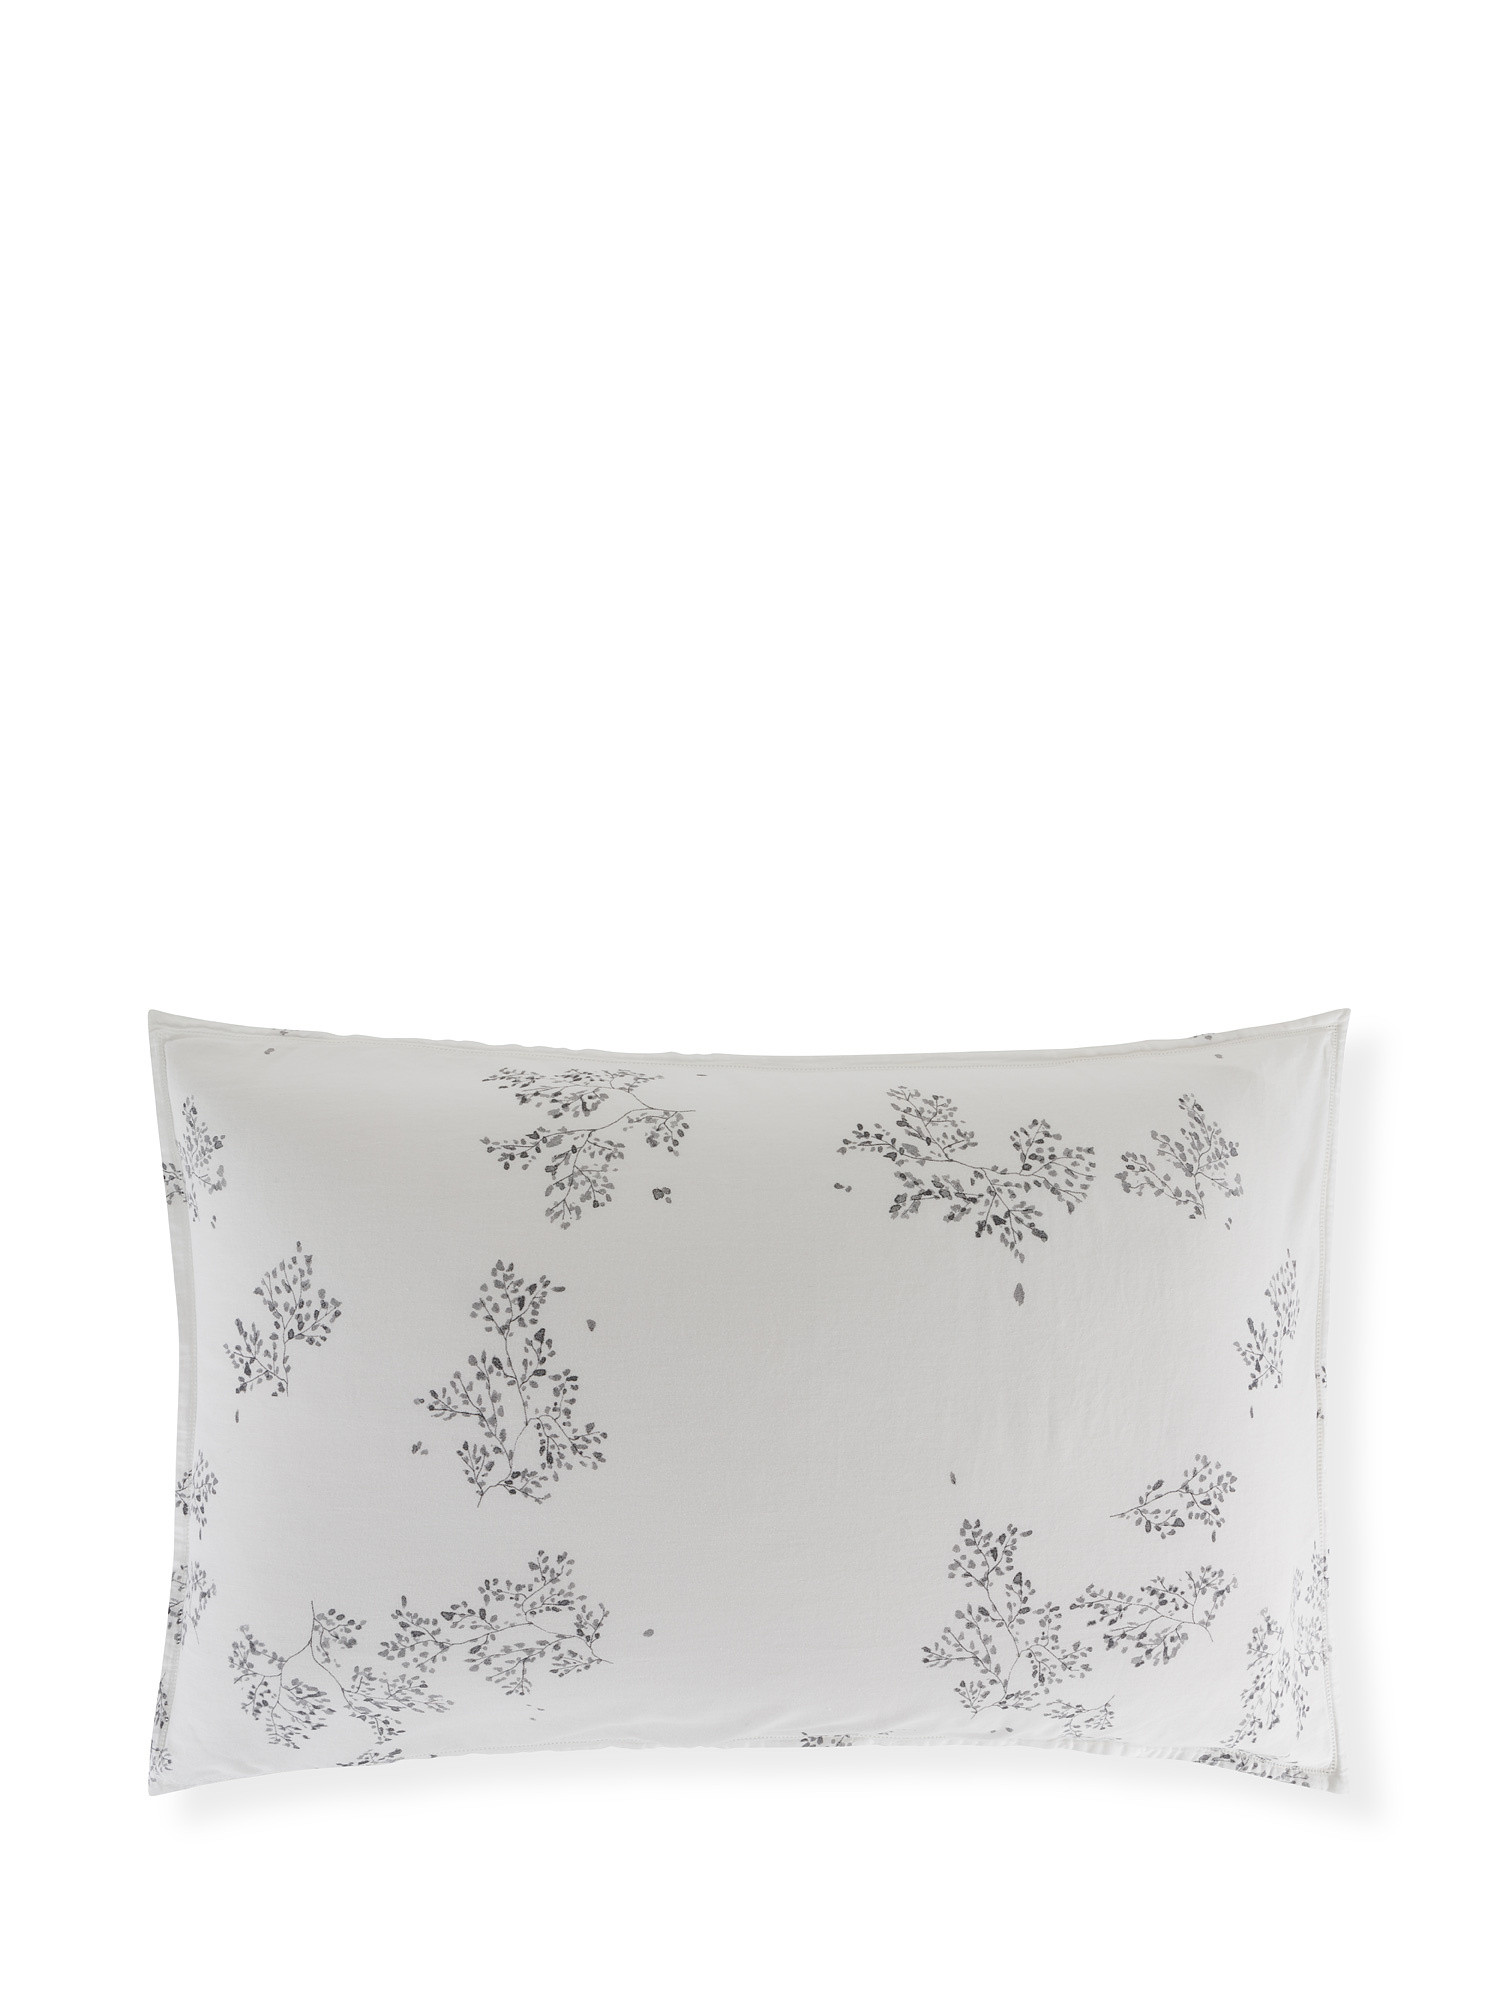 Portofino cotton satin pillowcase with ramage motif, White, large image number 0